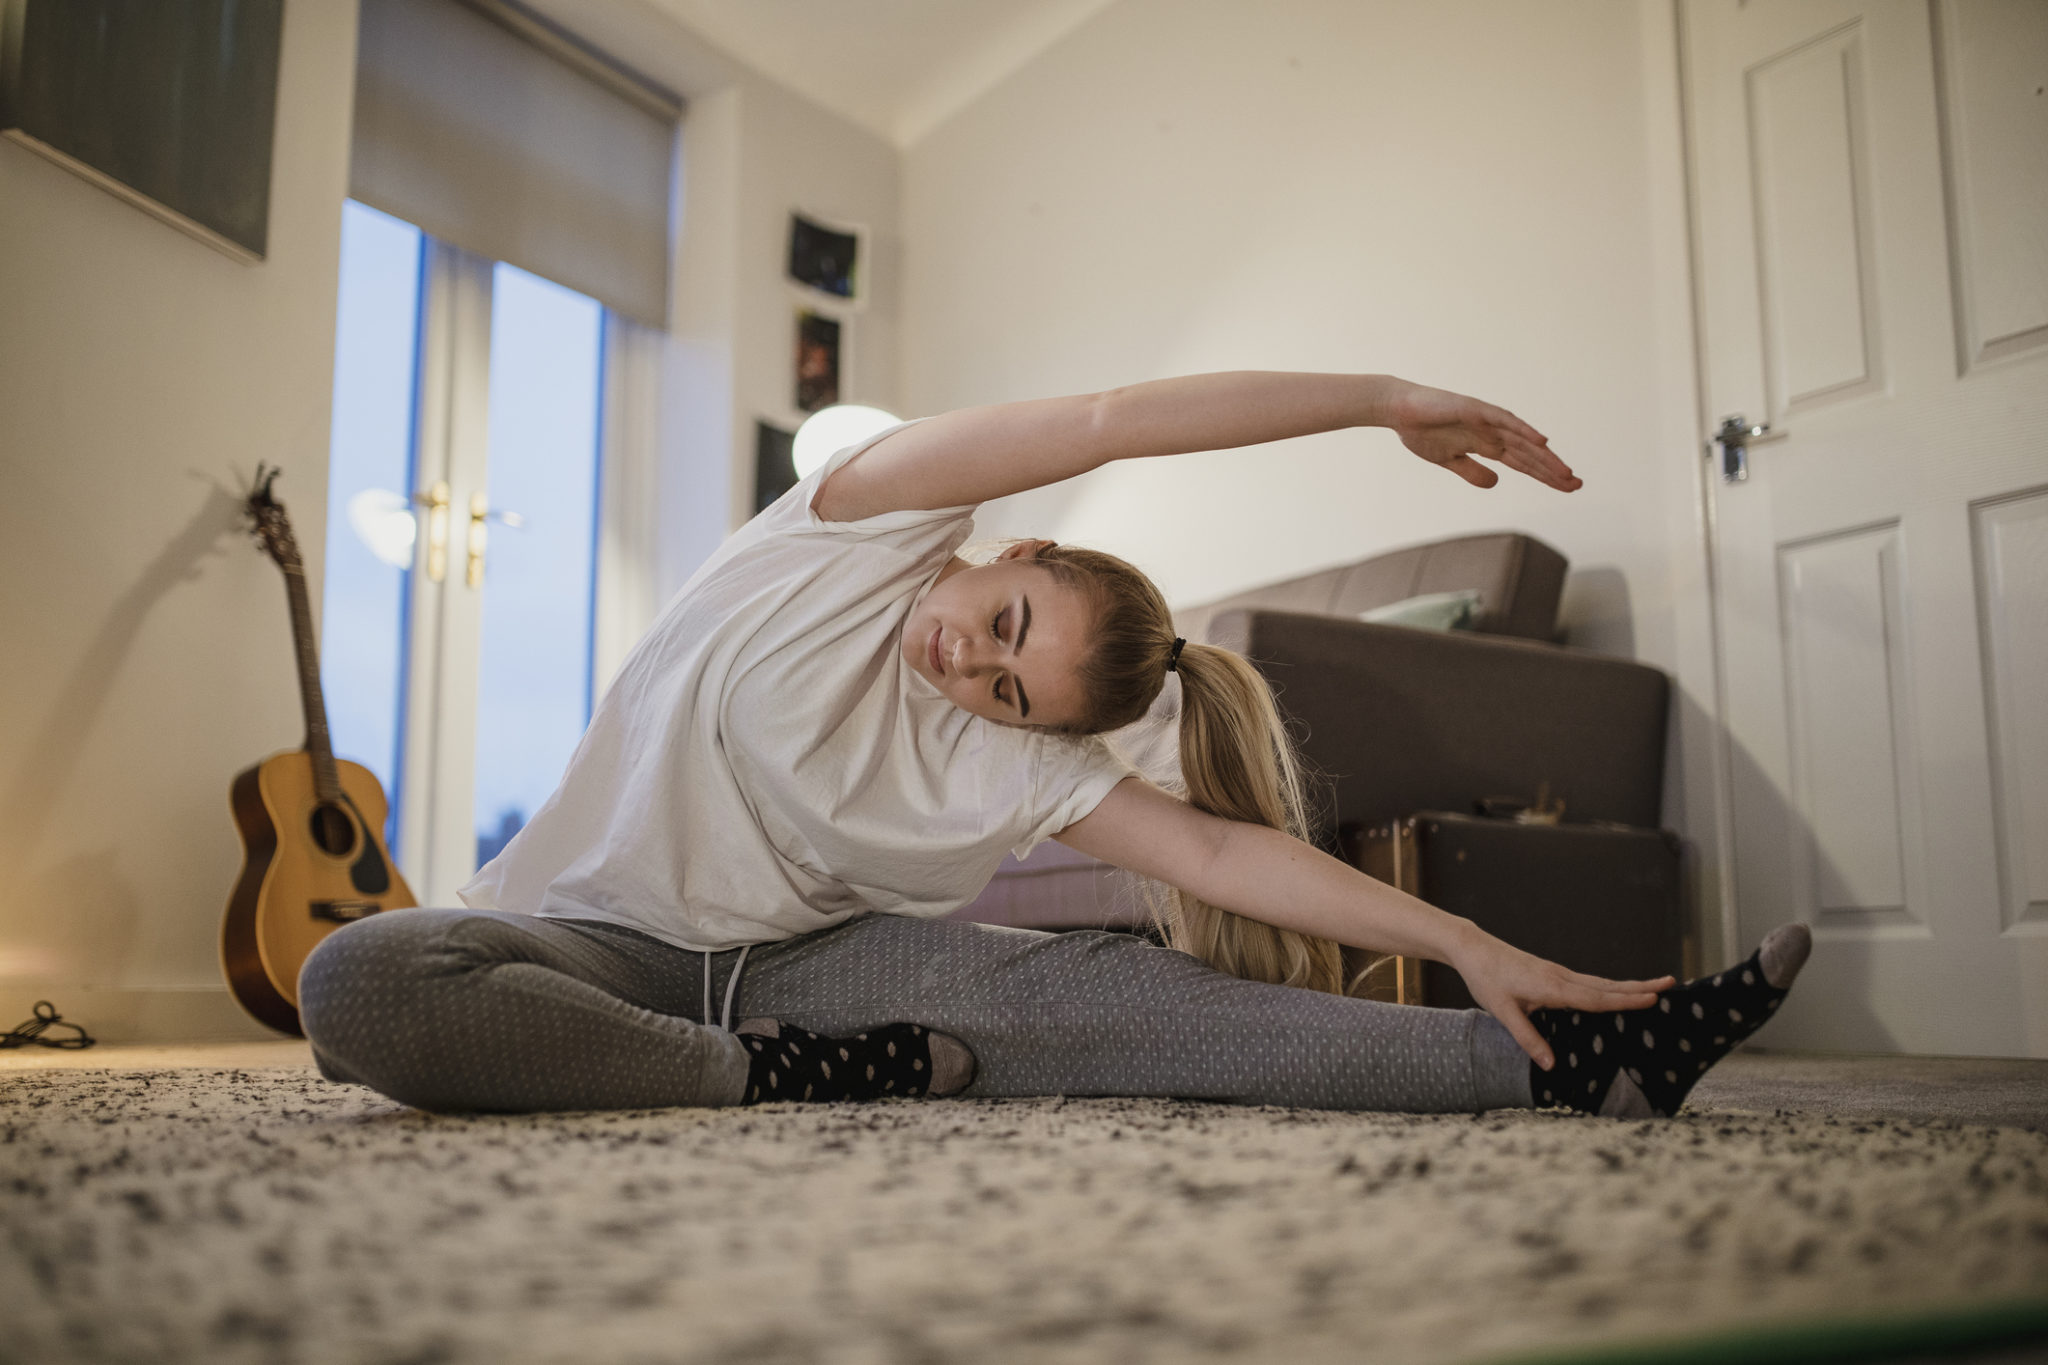 University student is doing yoga in her living room.